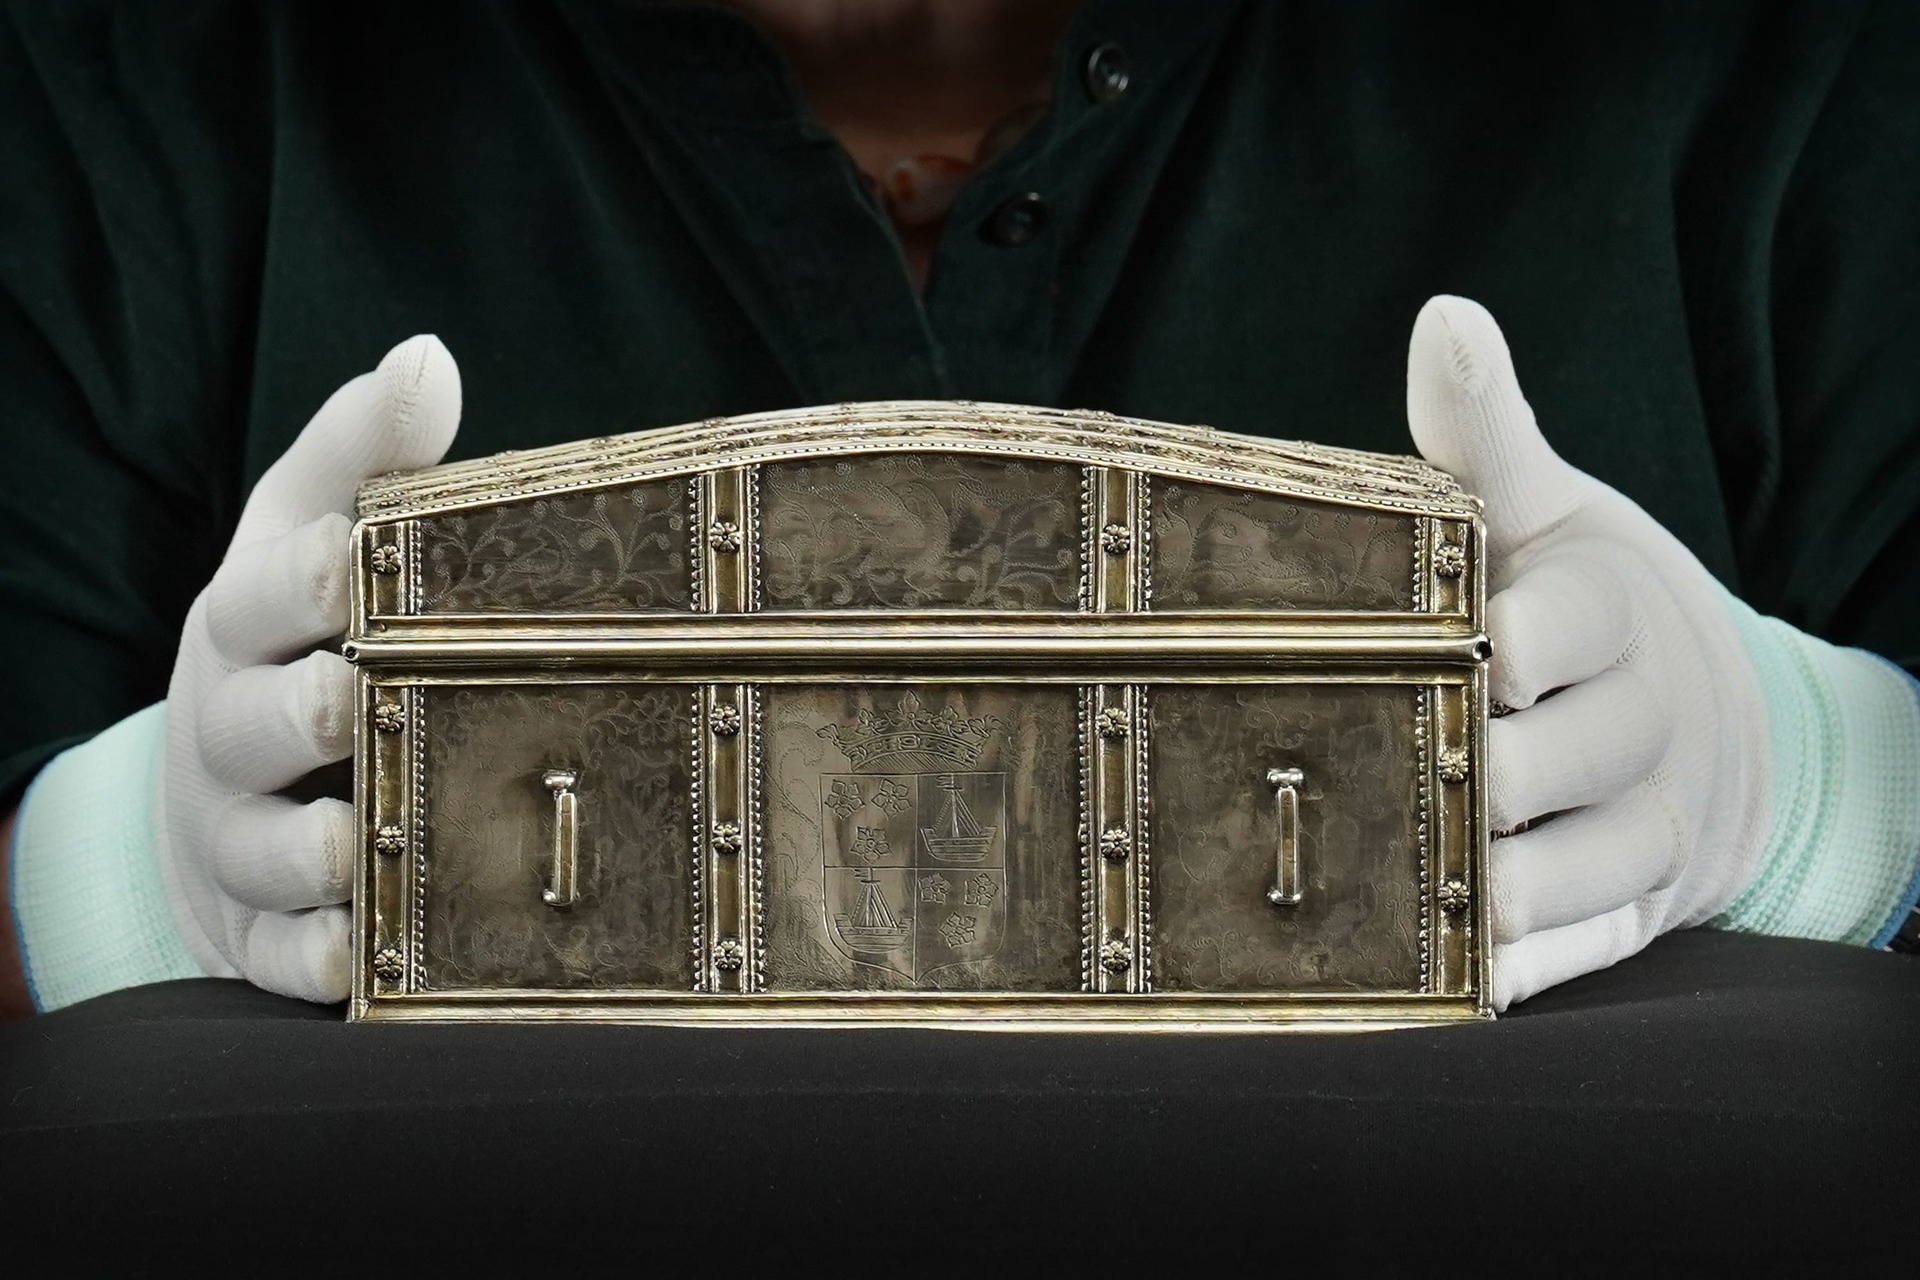 The casket was made in Paris